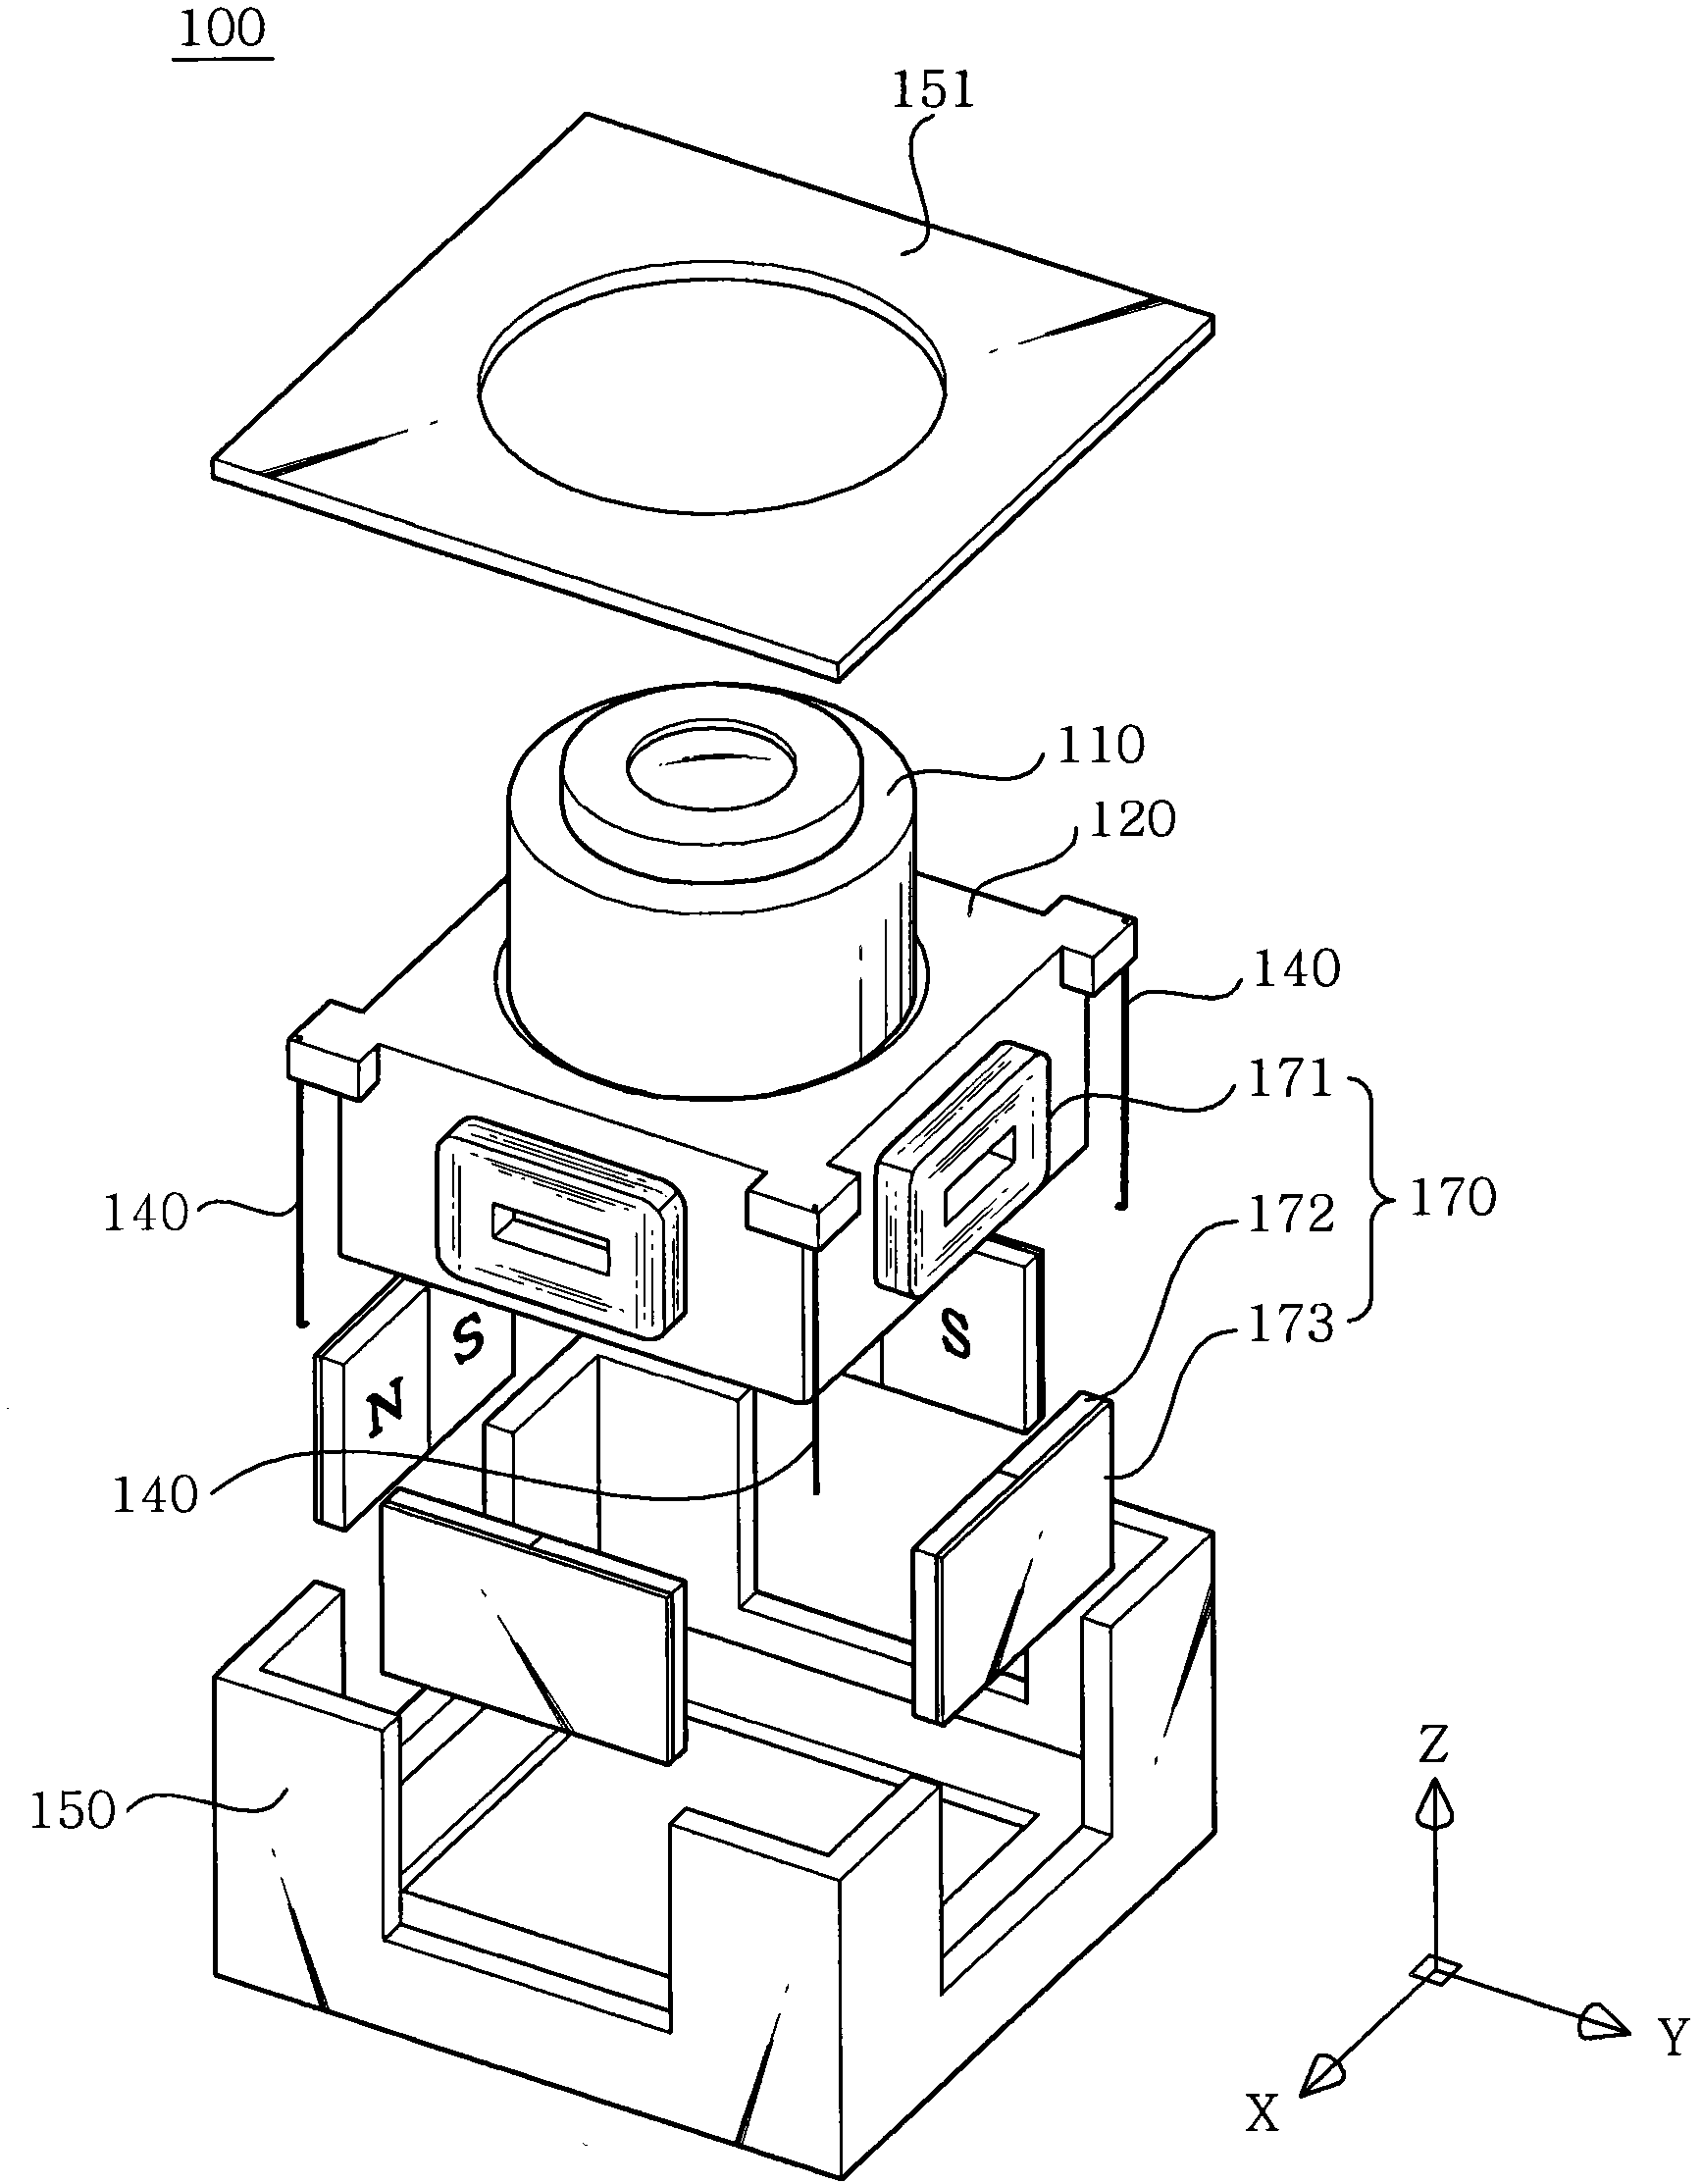 Camera module with anti-shake device